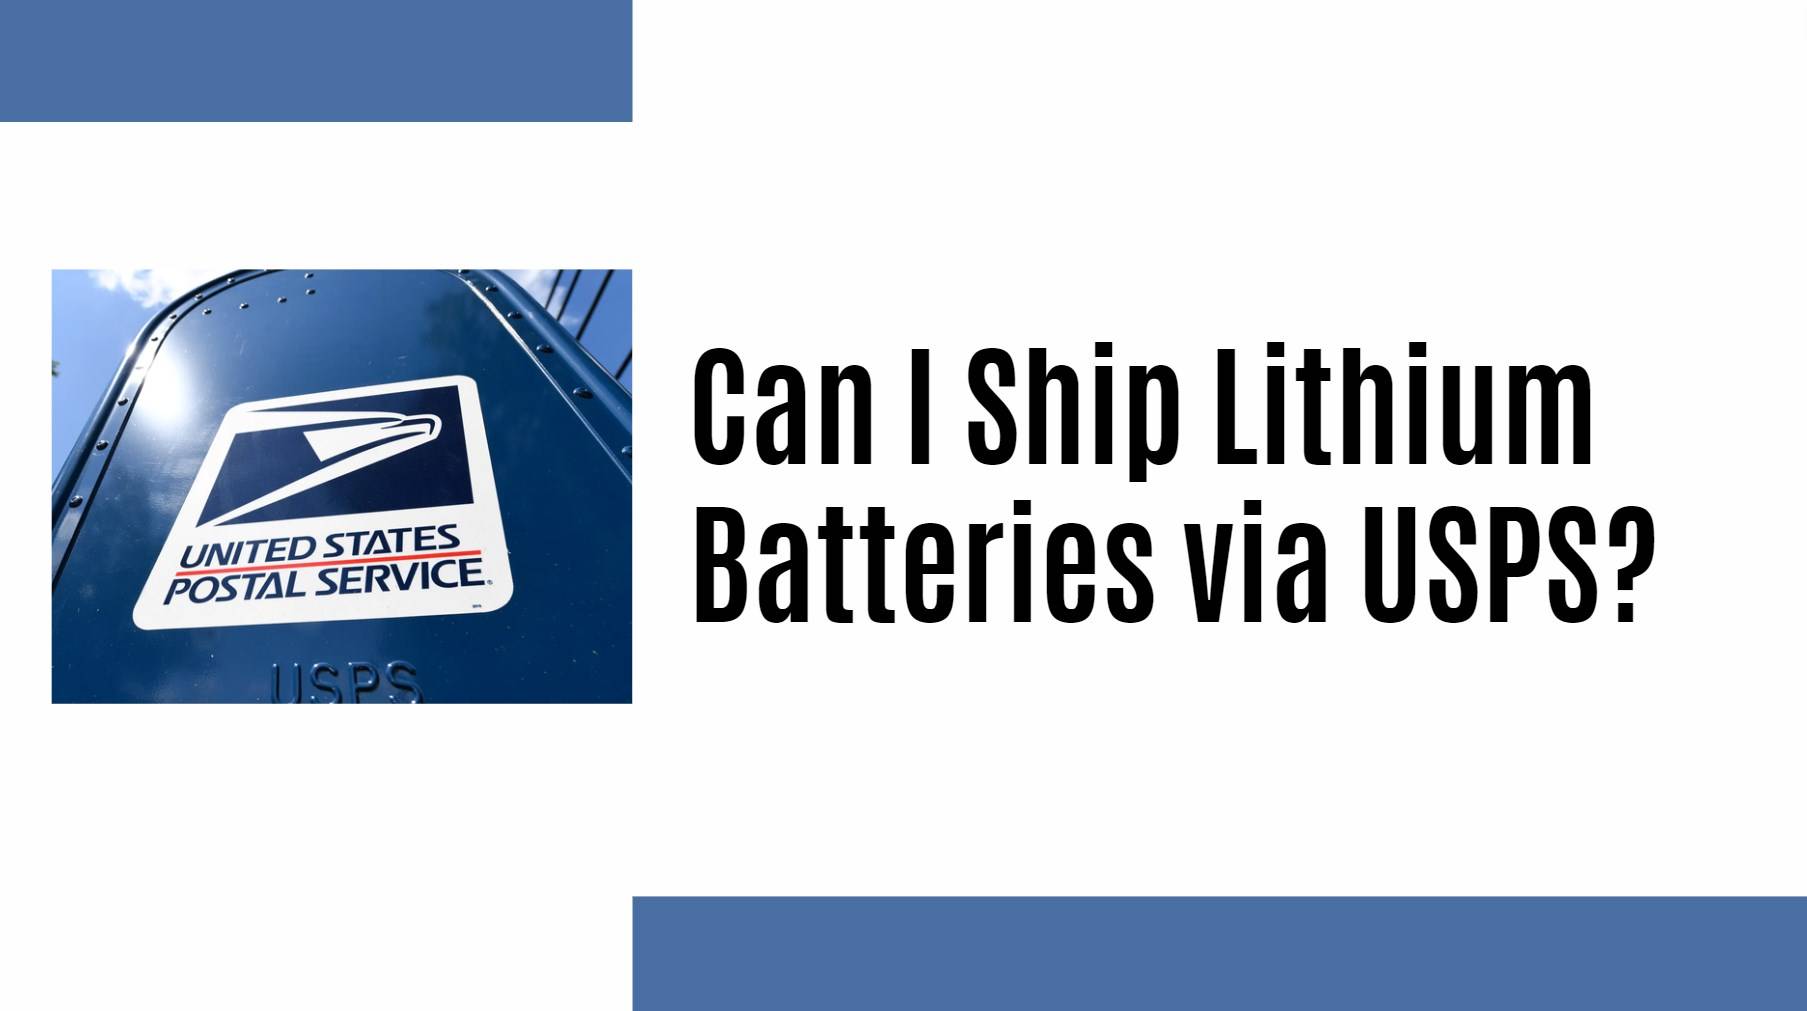 Can I Ship Lithium Batteries via USPS?